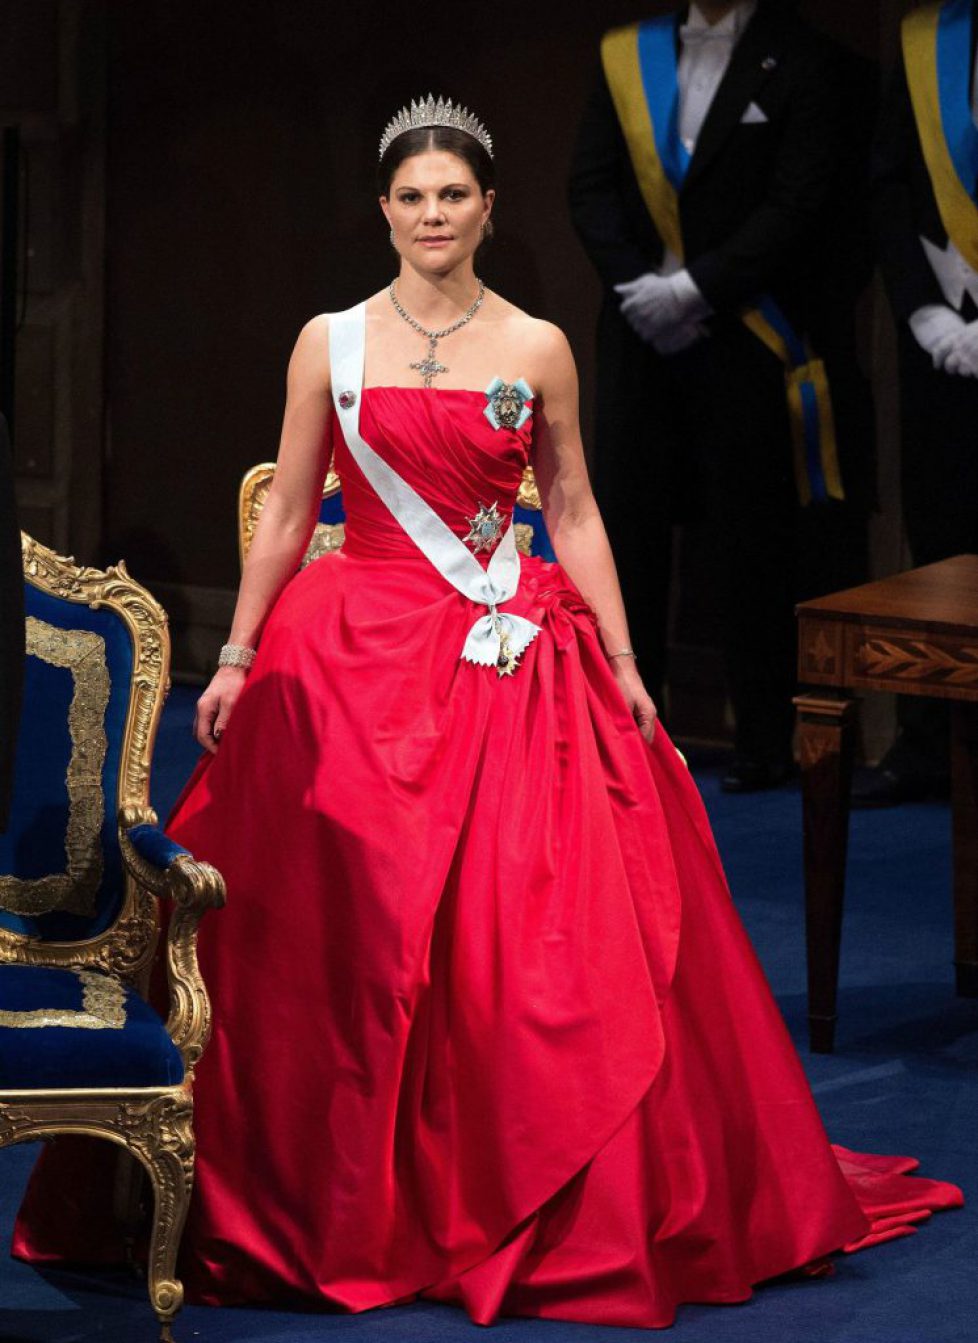 fashion-2014-12-princess-victoria-nobel-peace-prize-stockholm-2014-main.jpg